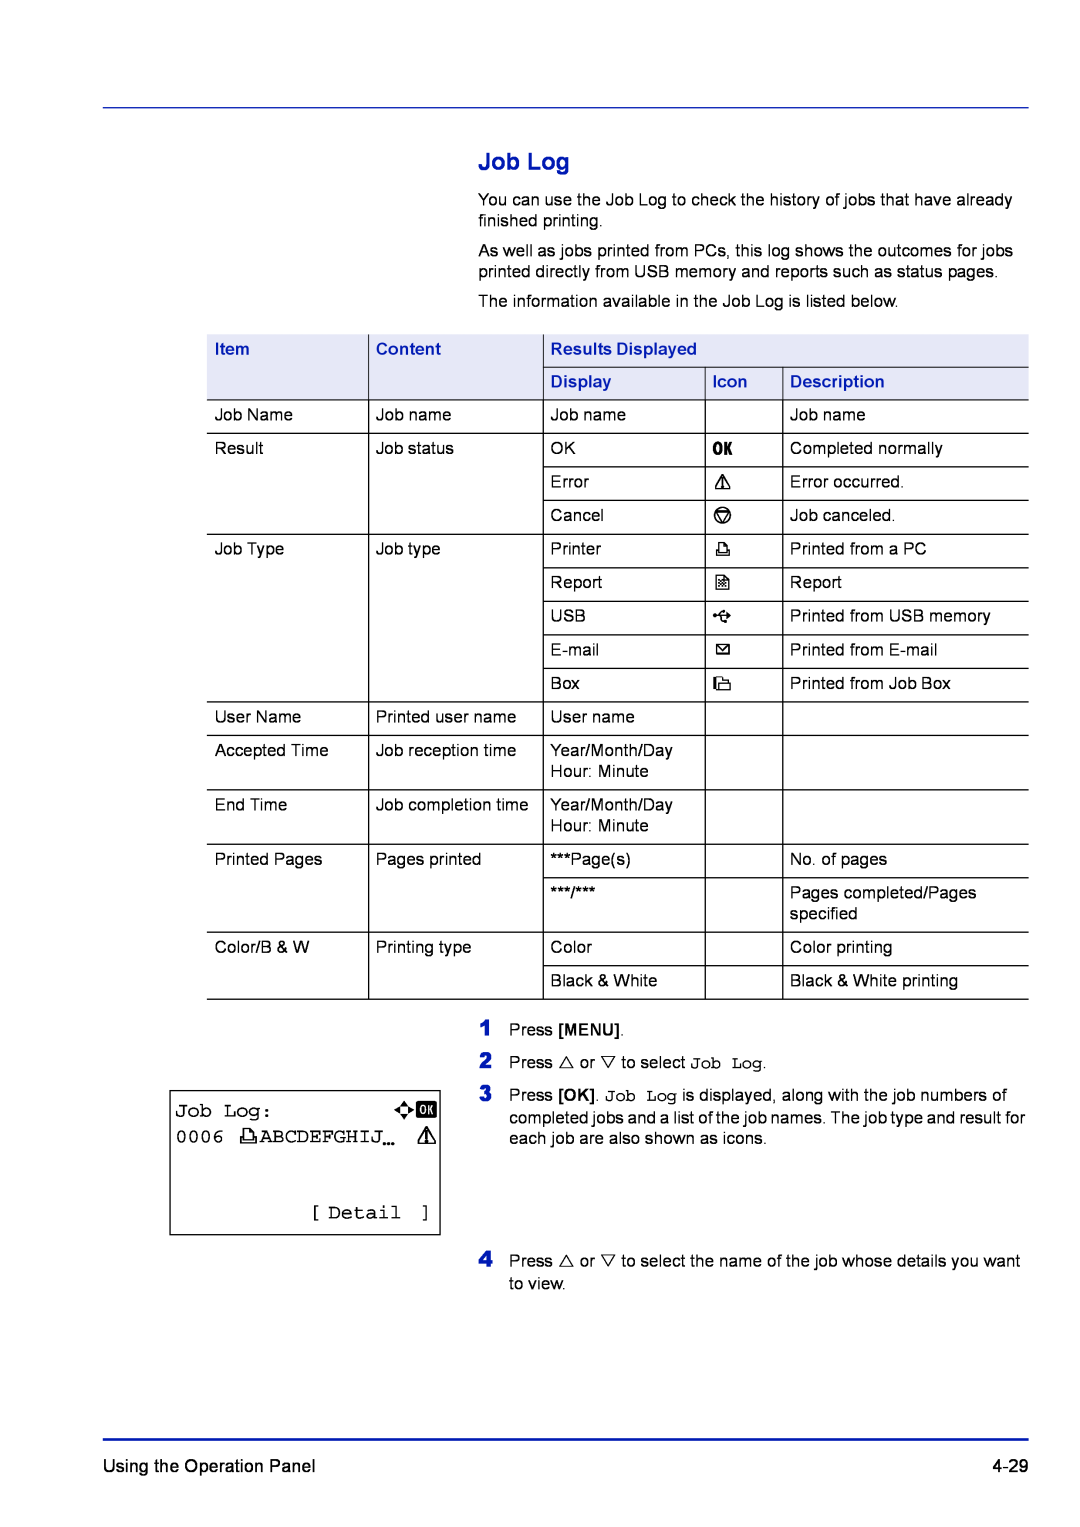 Kyocera FS-C5400DN manual Job Log: a b 0006 n ABCDEFGHIJN, Detail, Item, Content, Results Displayed, Icon, Description 